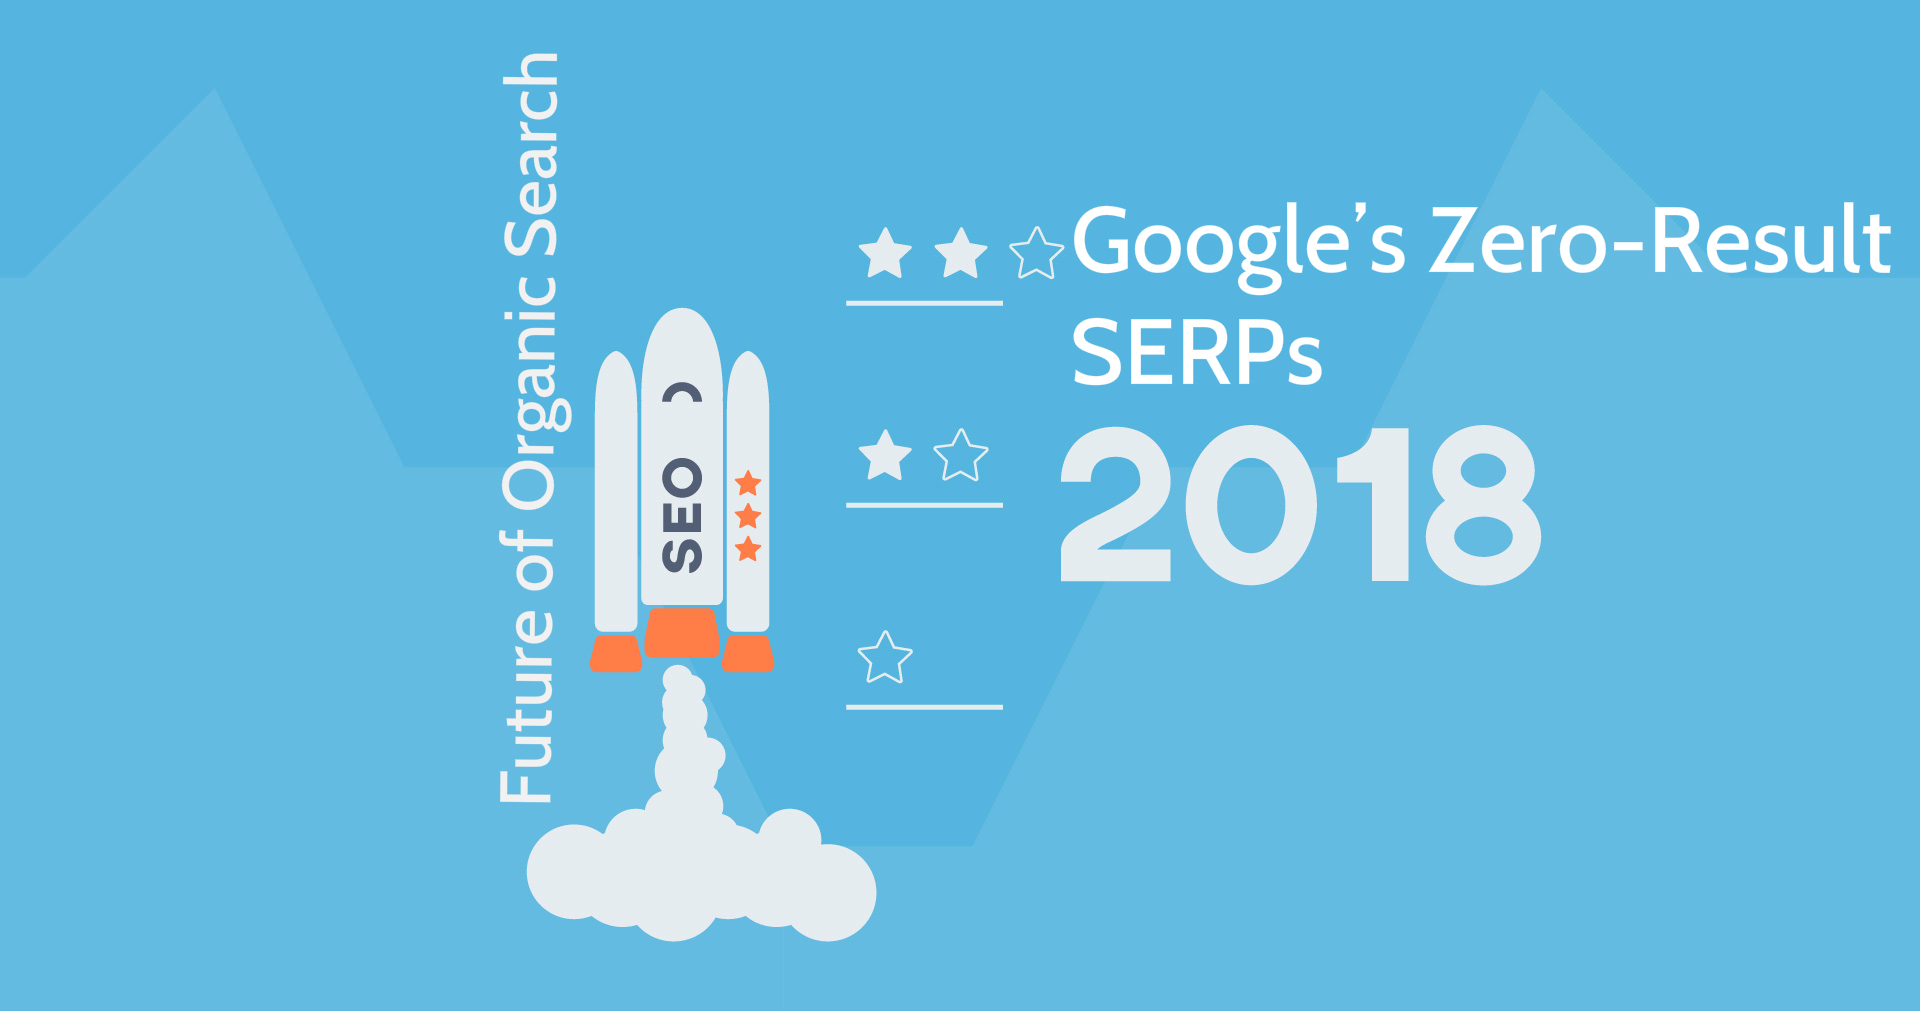 Google’s Zero-Result SERPs